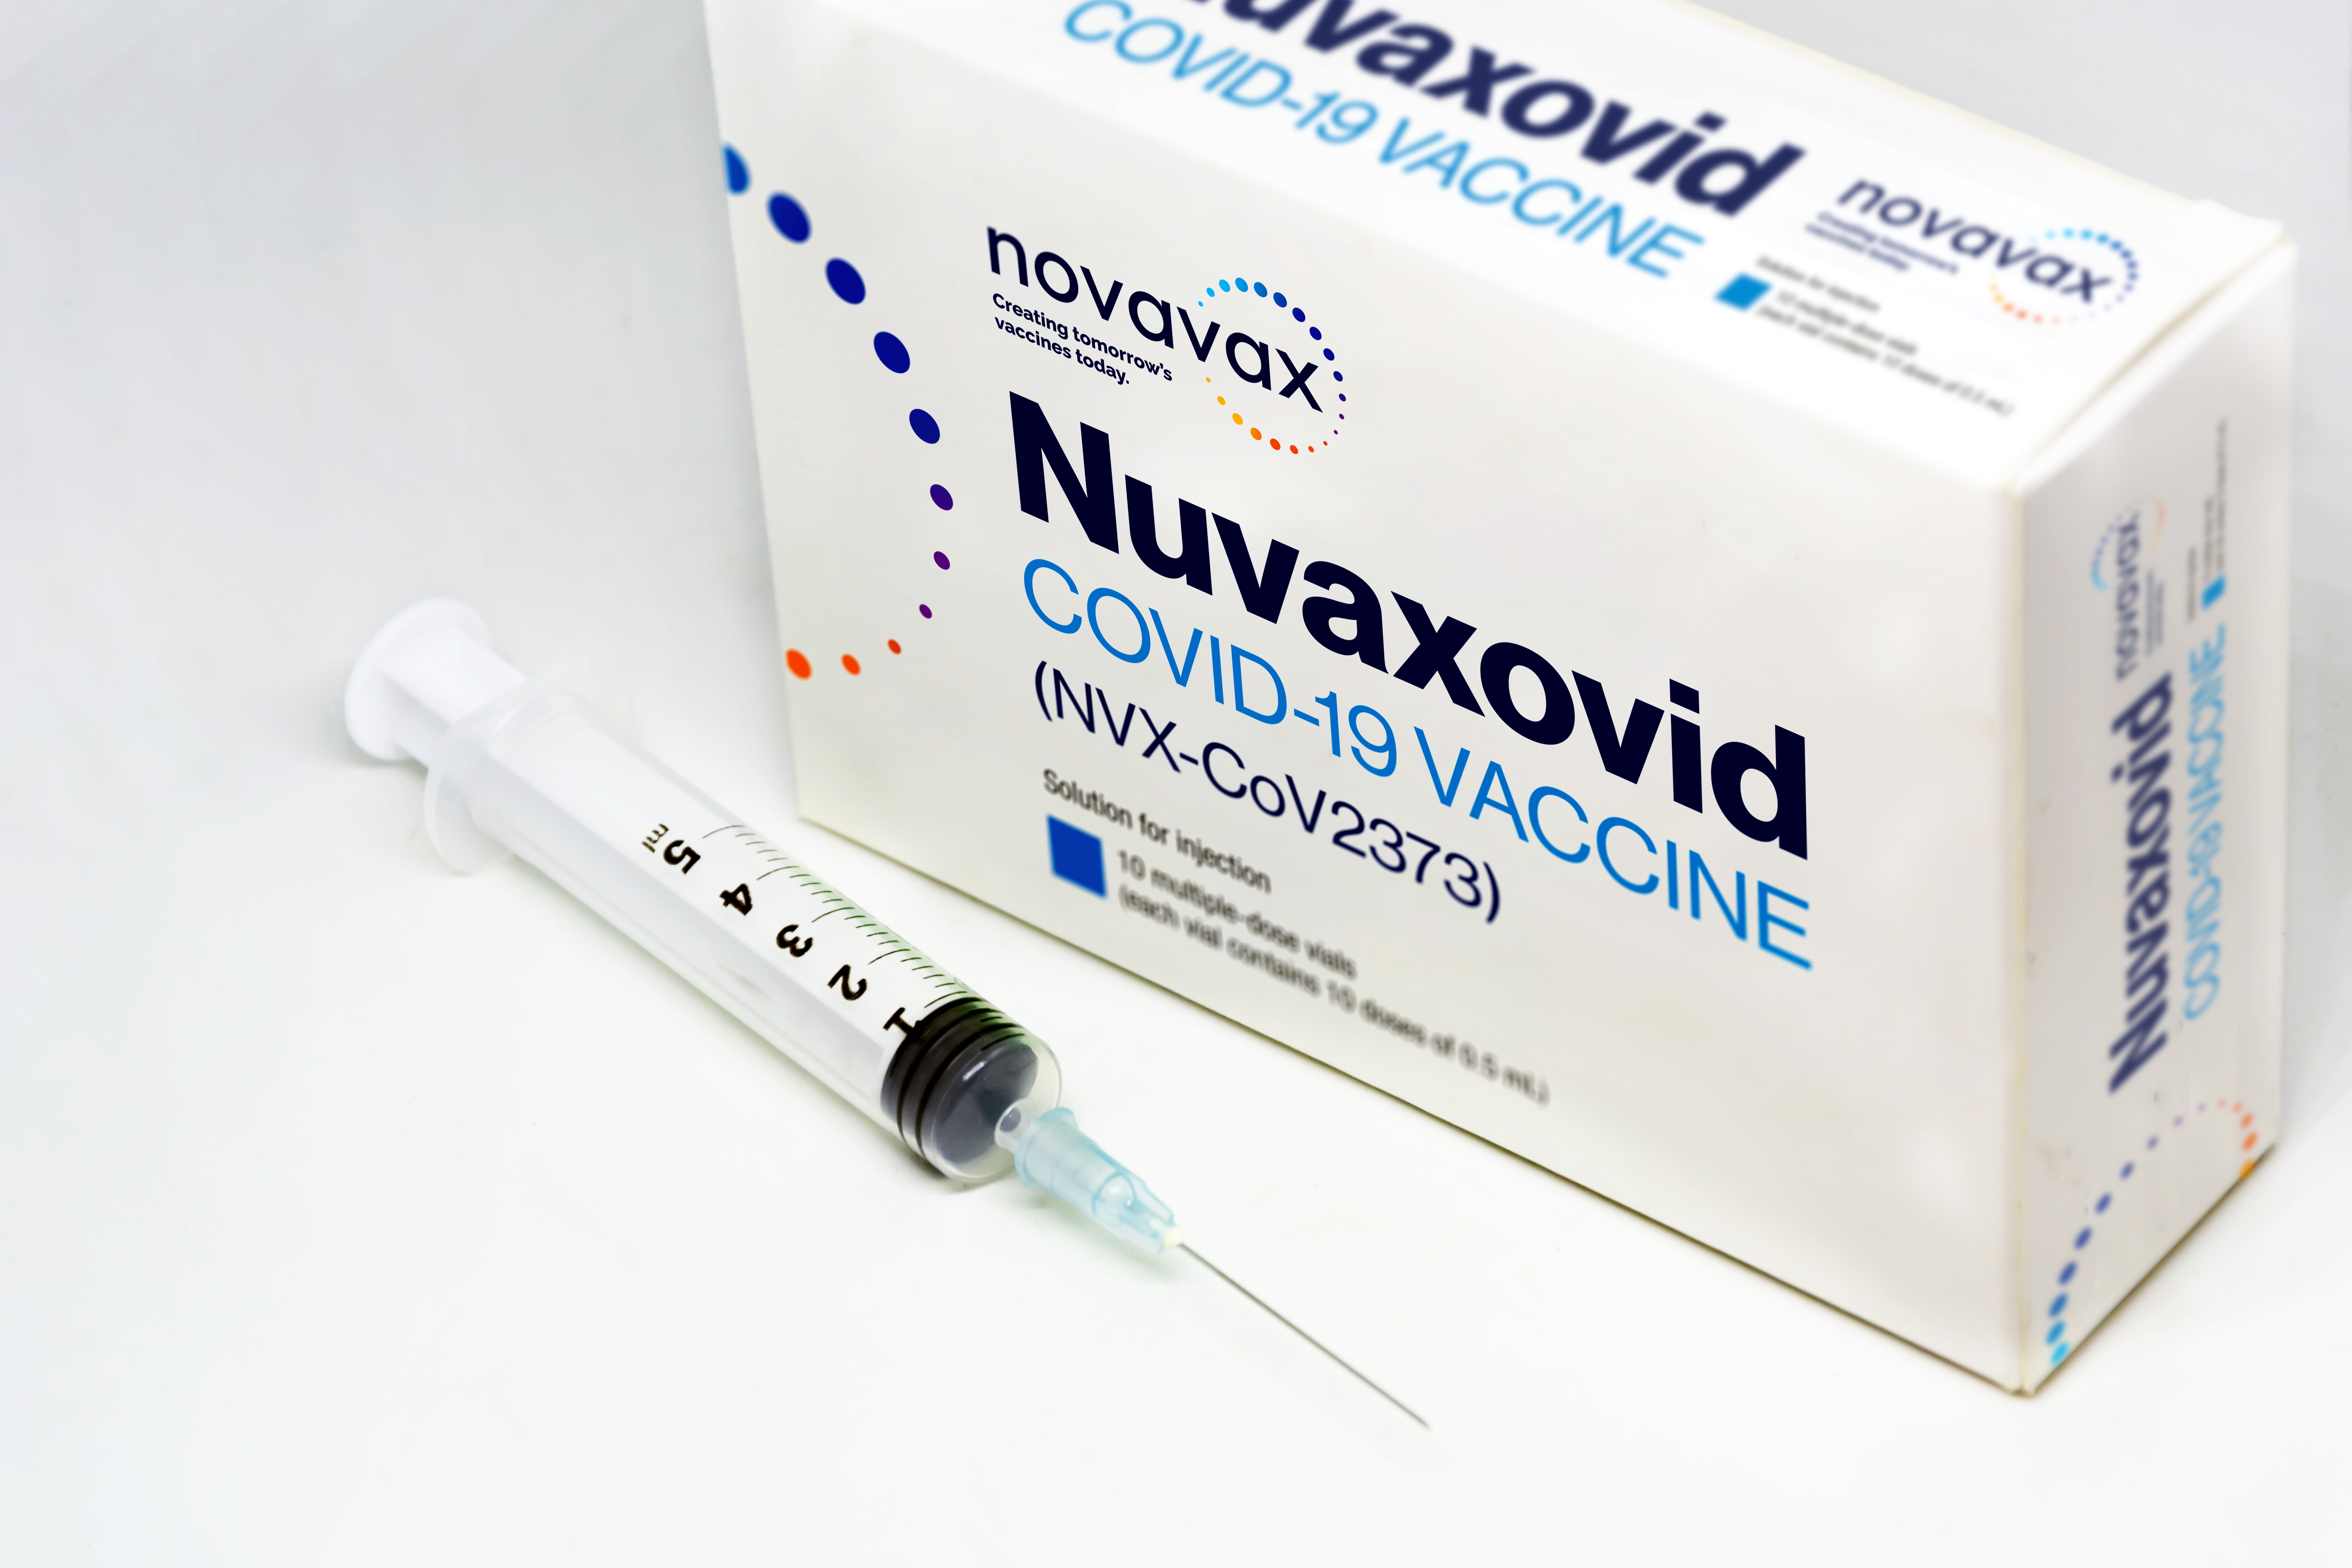     Covid-19 : le vaccin Novavax accueilli avec méfiance en Martinique

